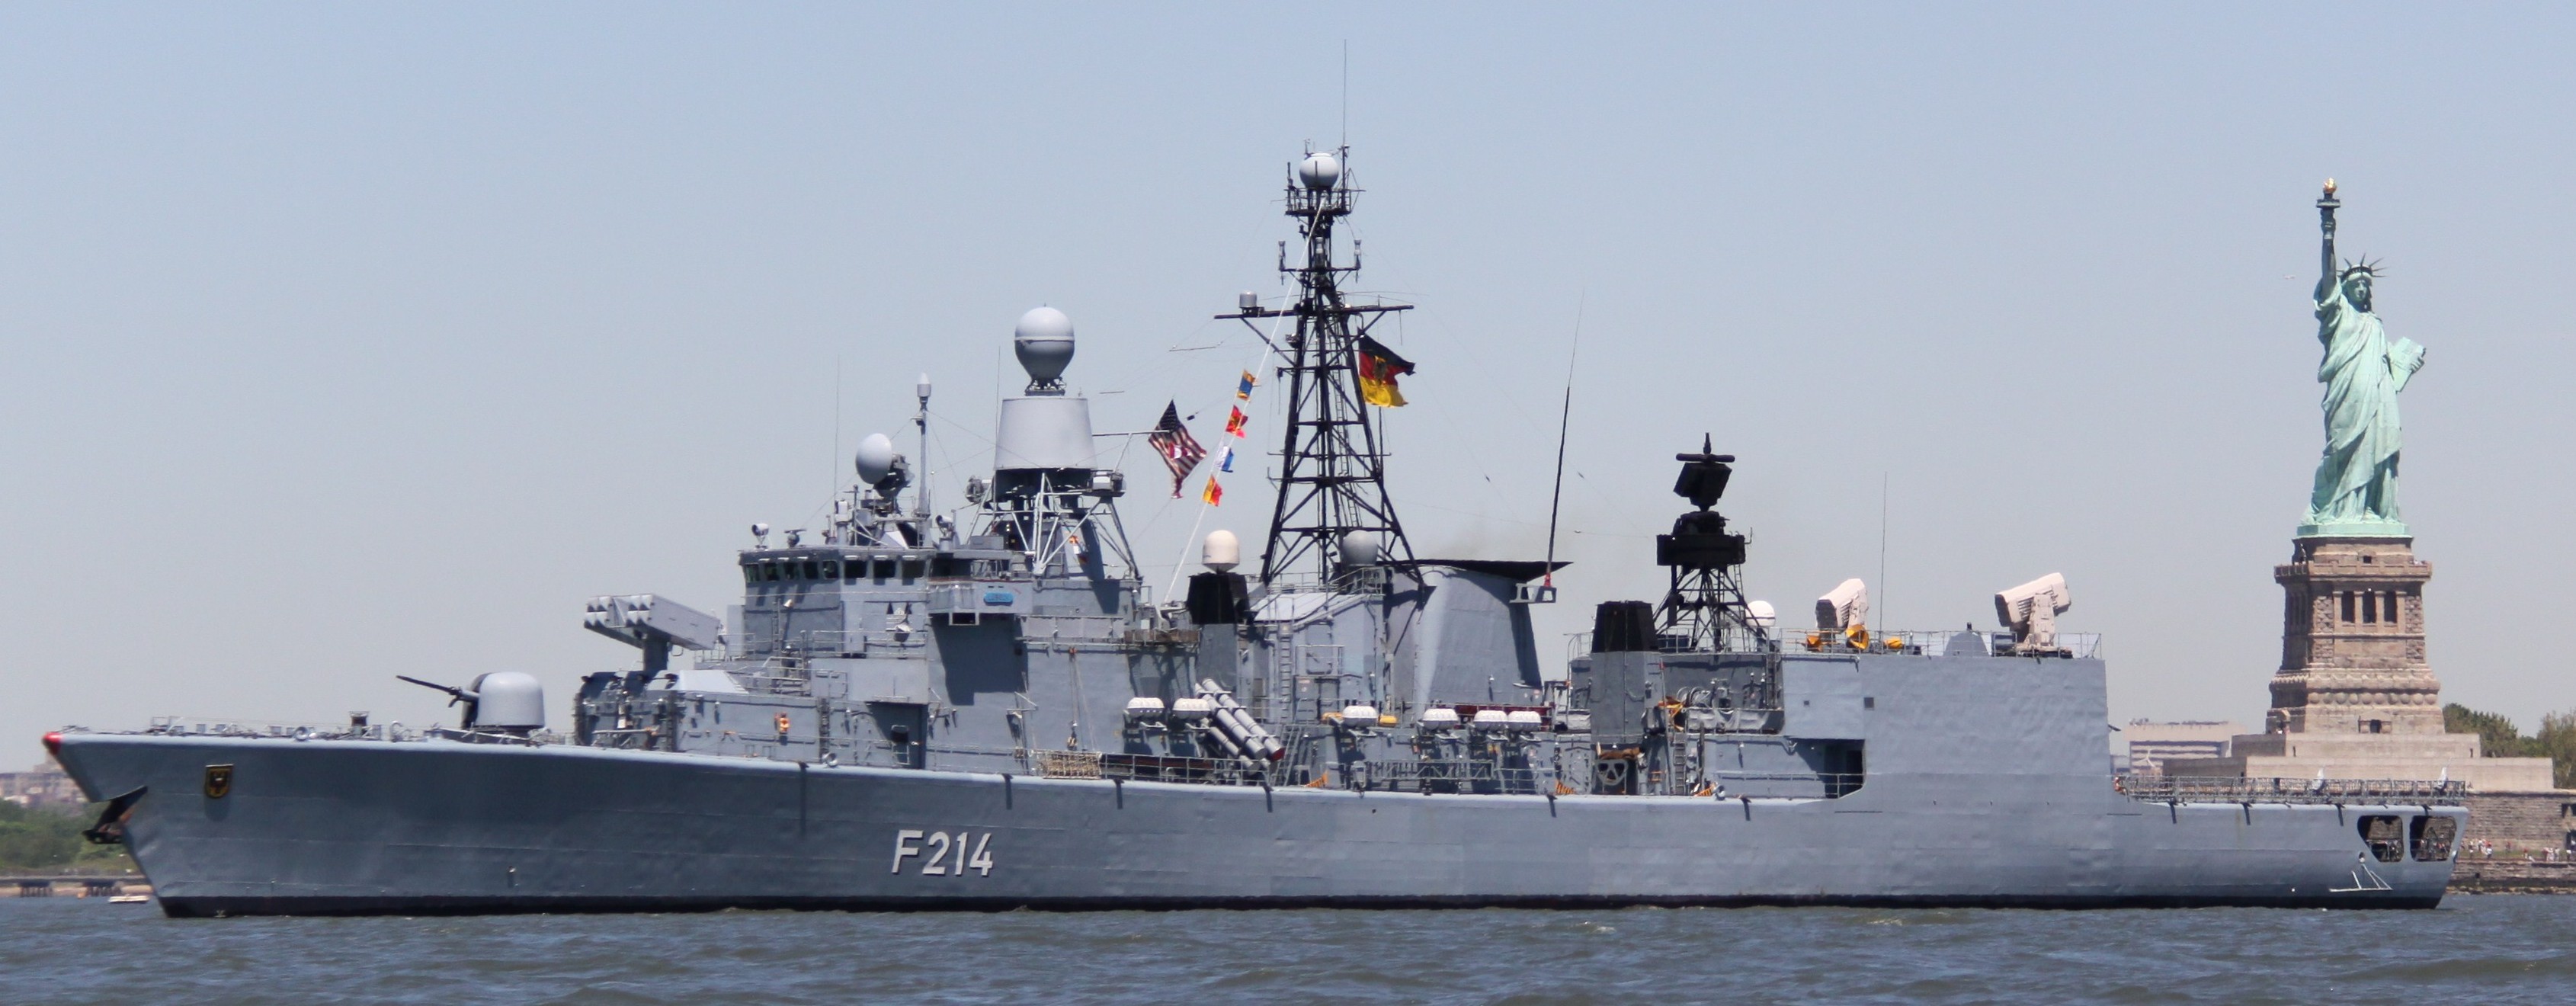 f-214 fgs lubeck type 122 bremen class frigate german navy 34 new york